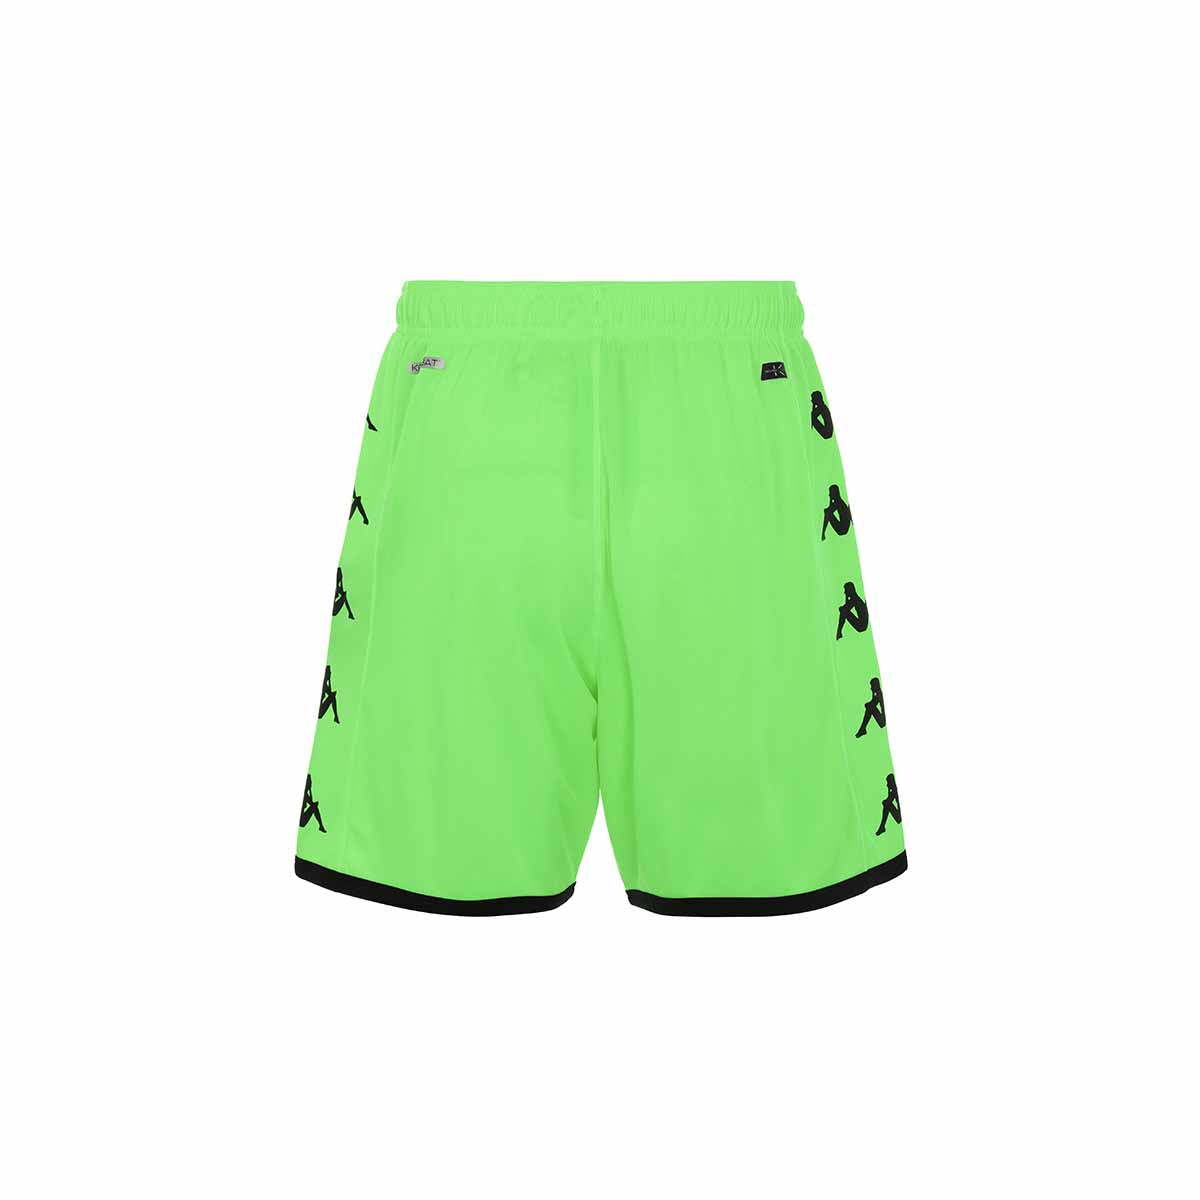 Pantalones cortos GK Ryder Verde Hombre